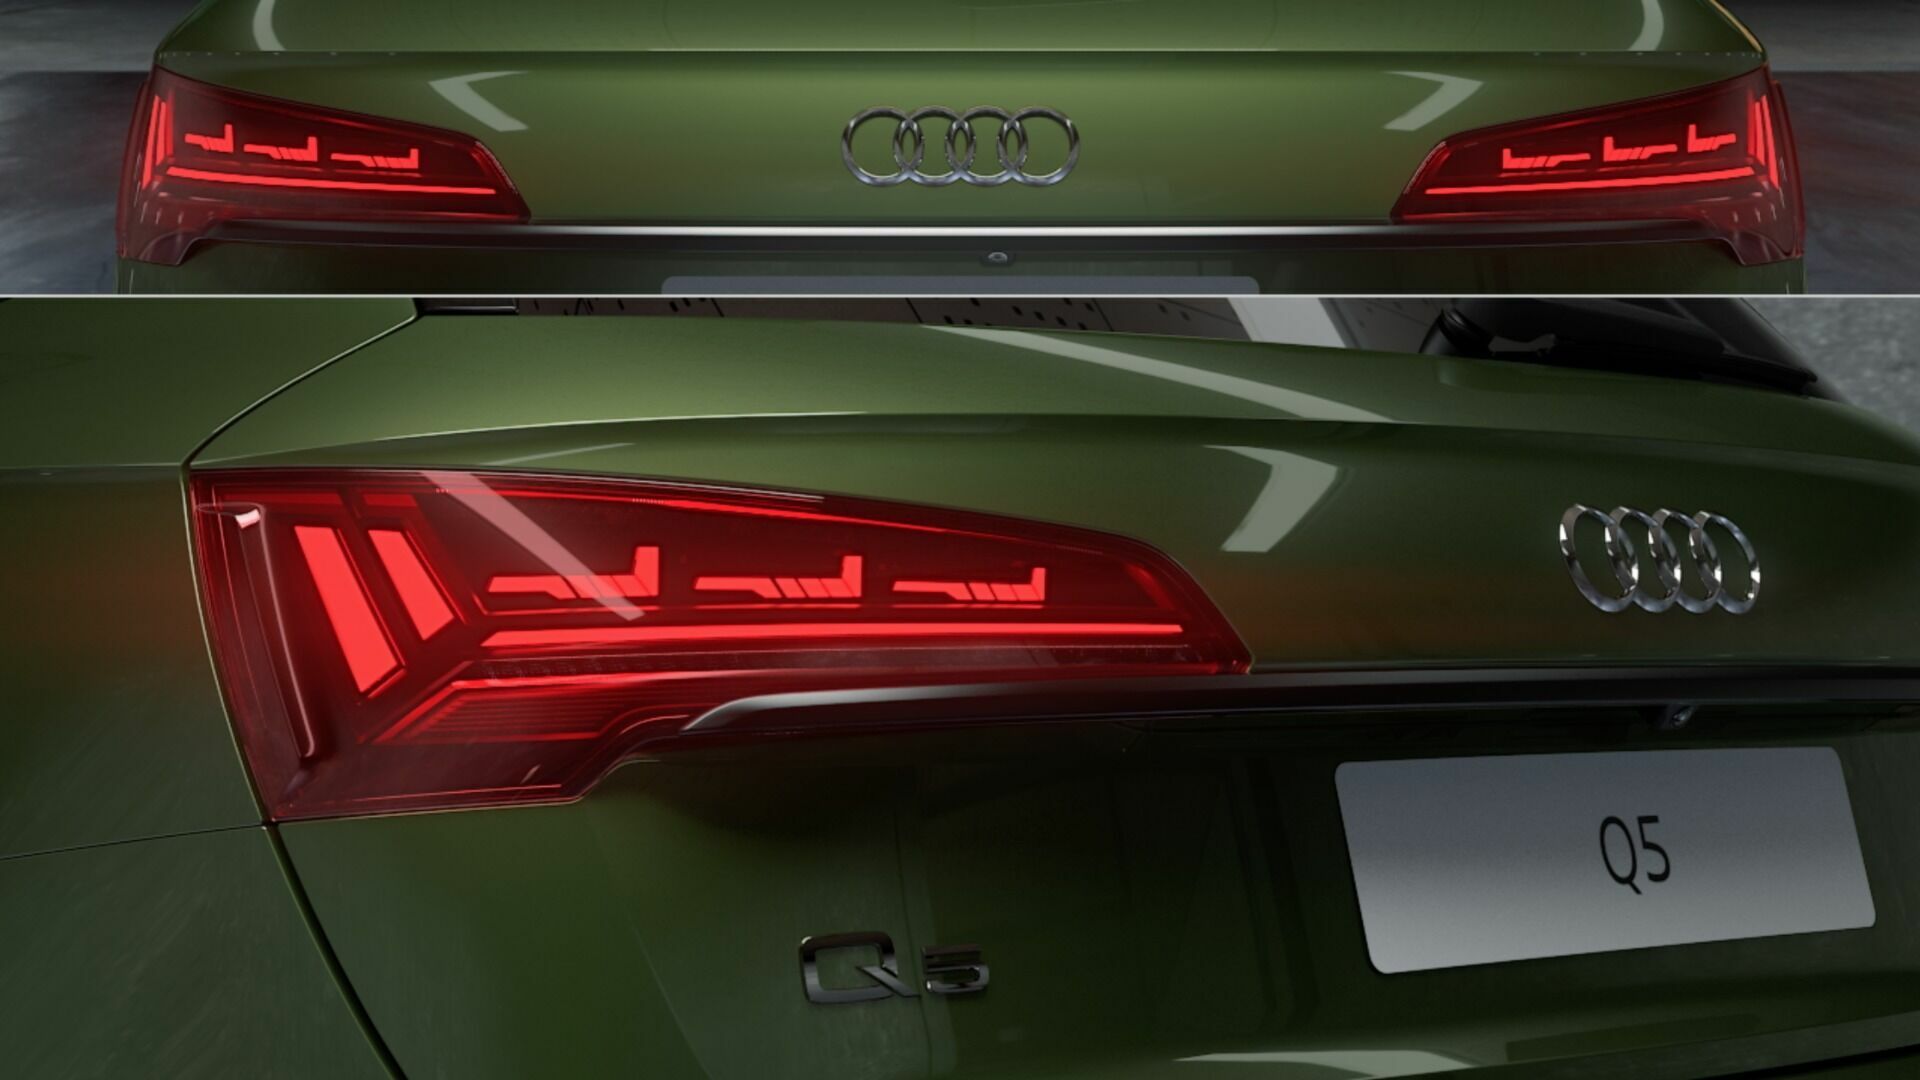 Animation: Digital OLED lighting technology in the Audi Q5